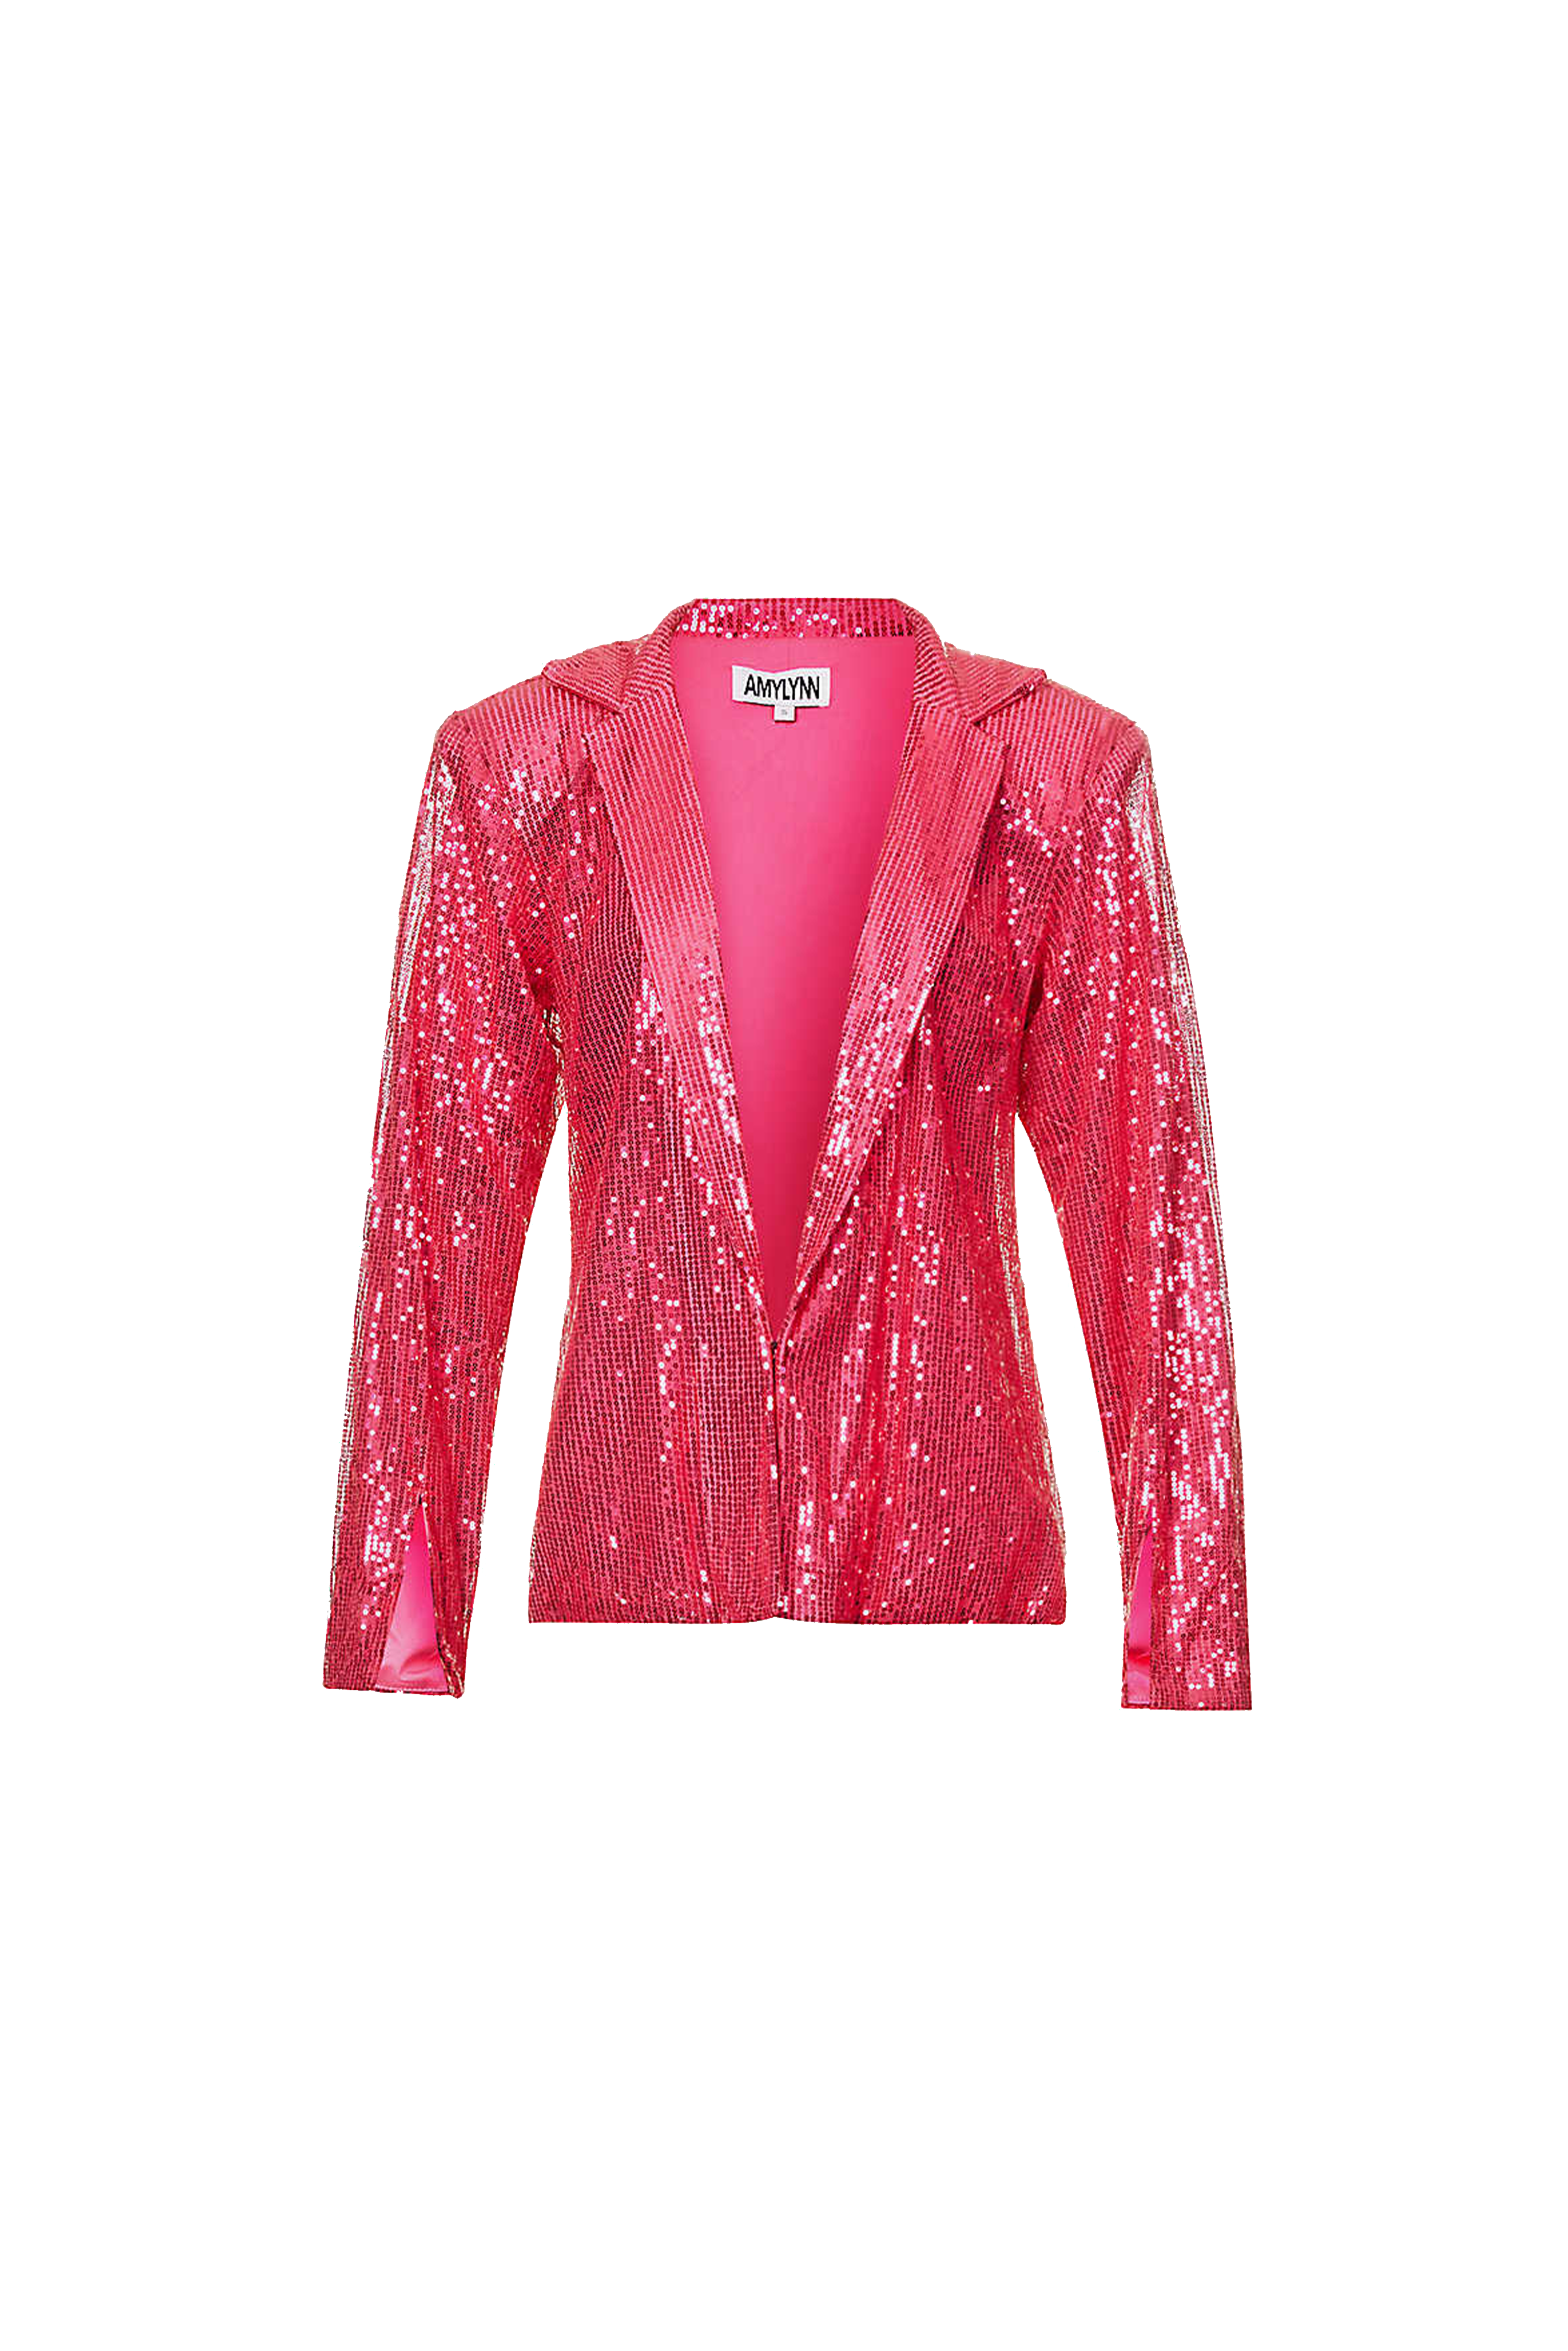 Savannah Pink Sequin Blazer Jacket